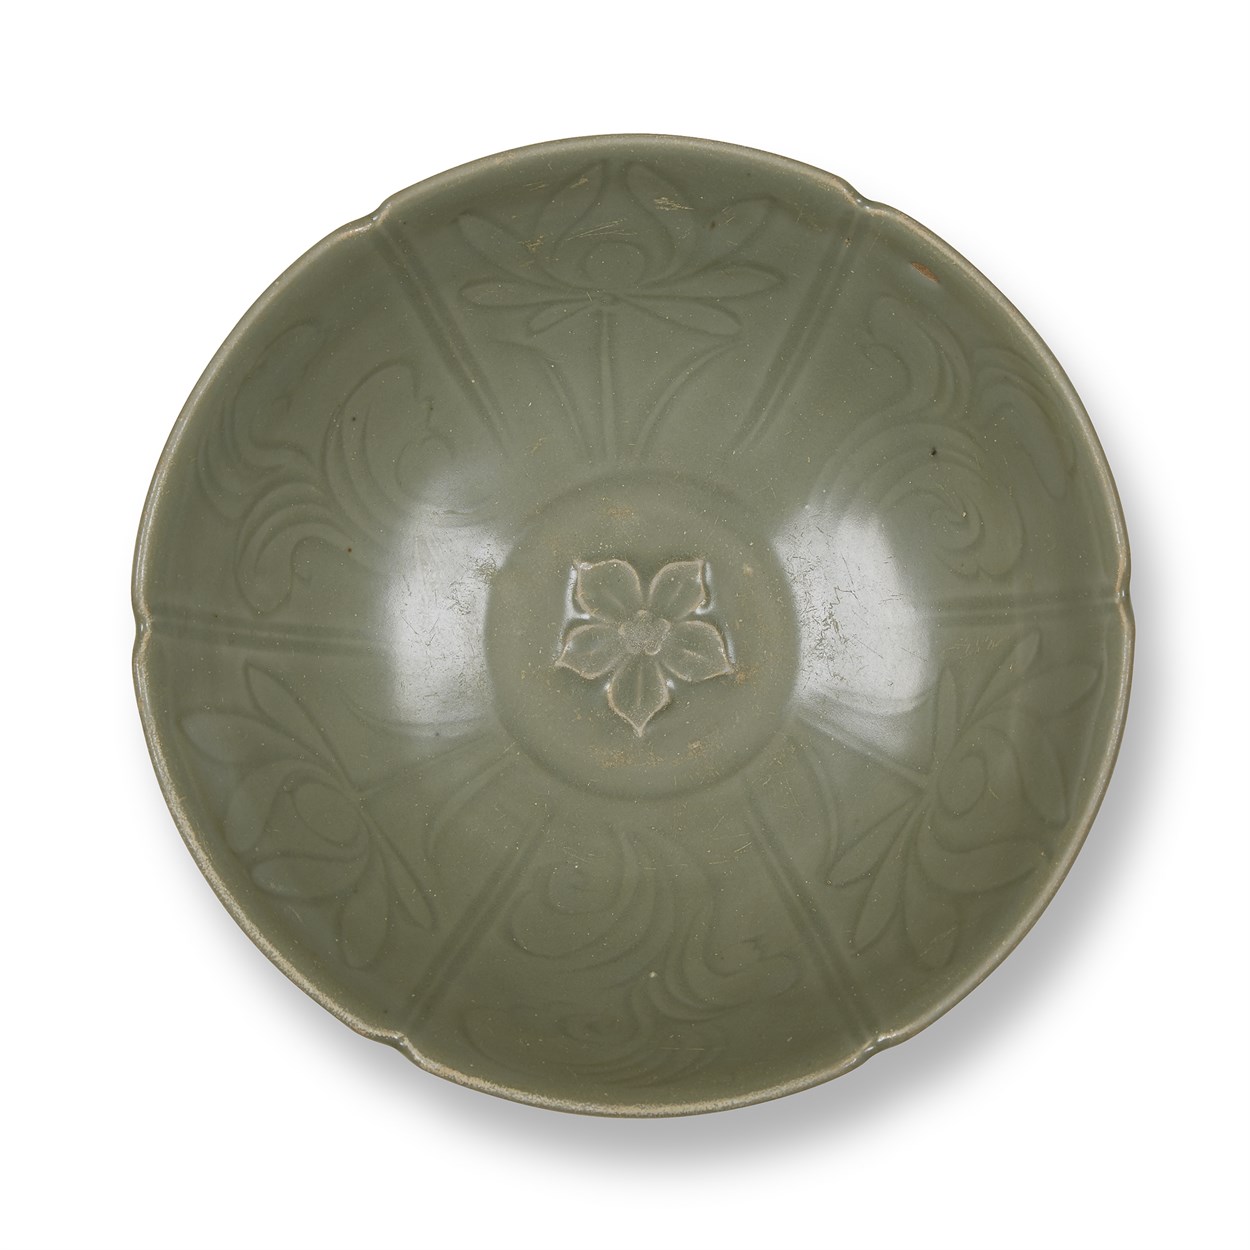 Lot 168 - A Chinese Longquan celadon bowl with foliate rim